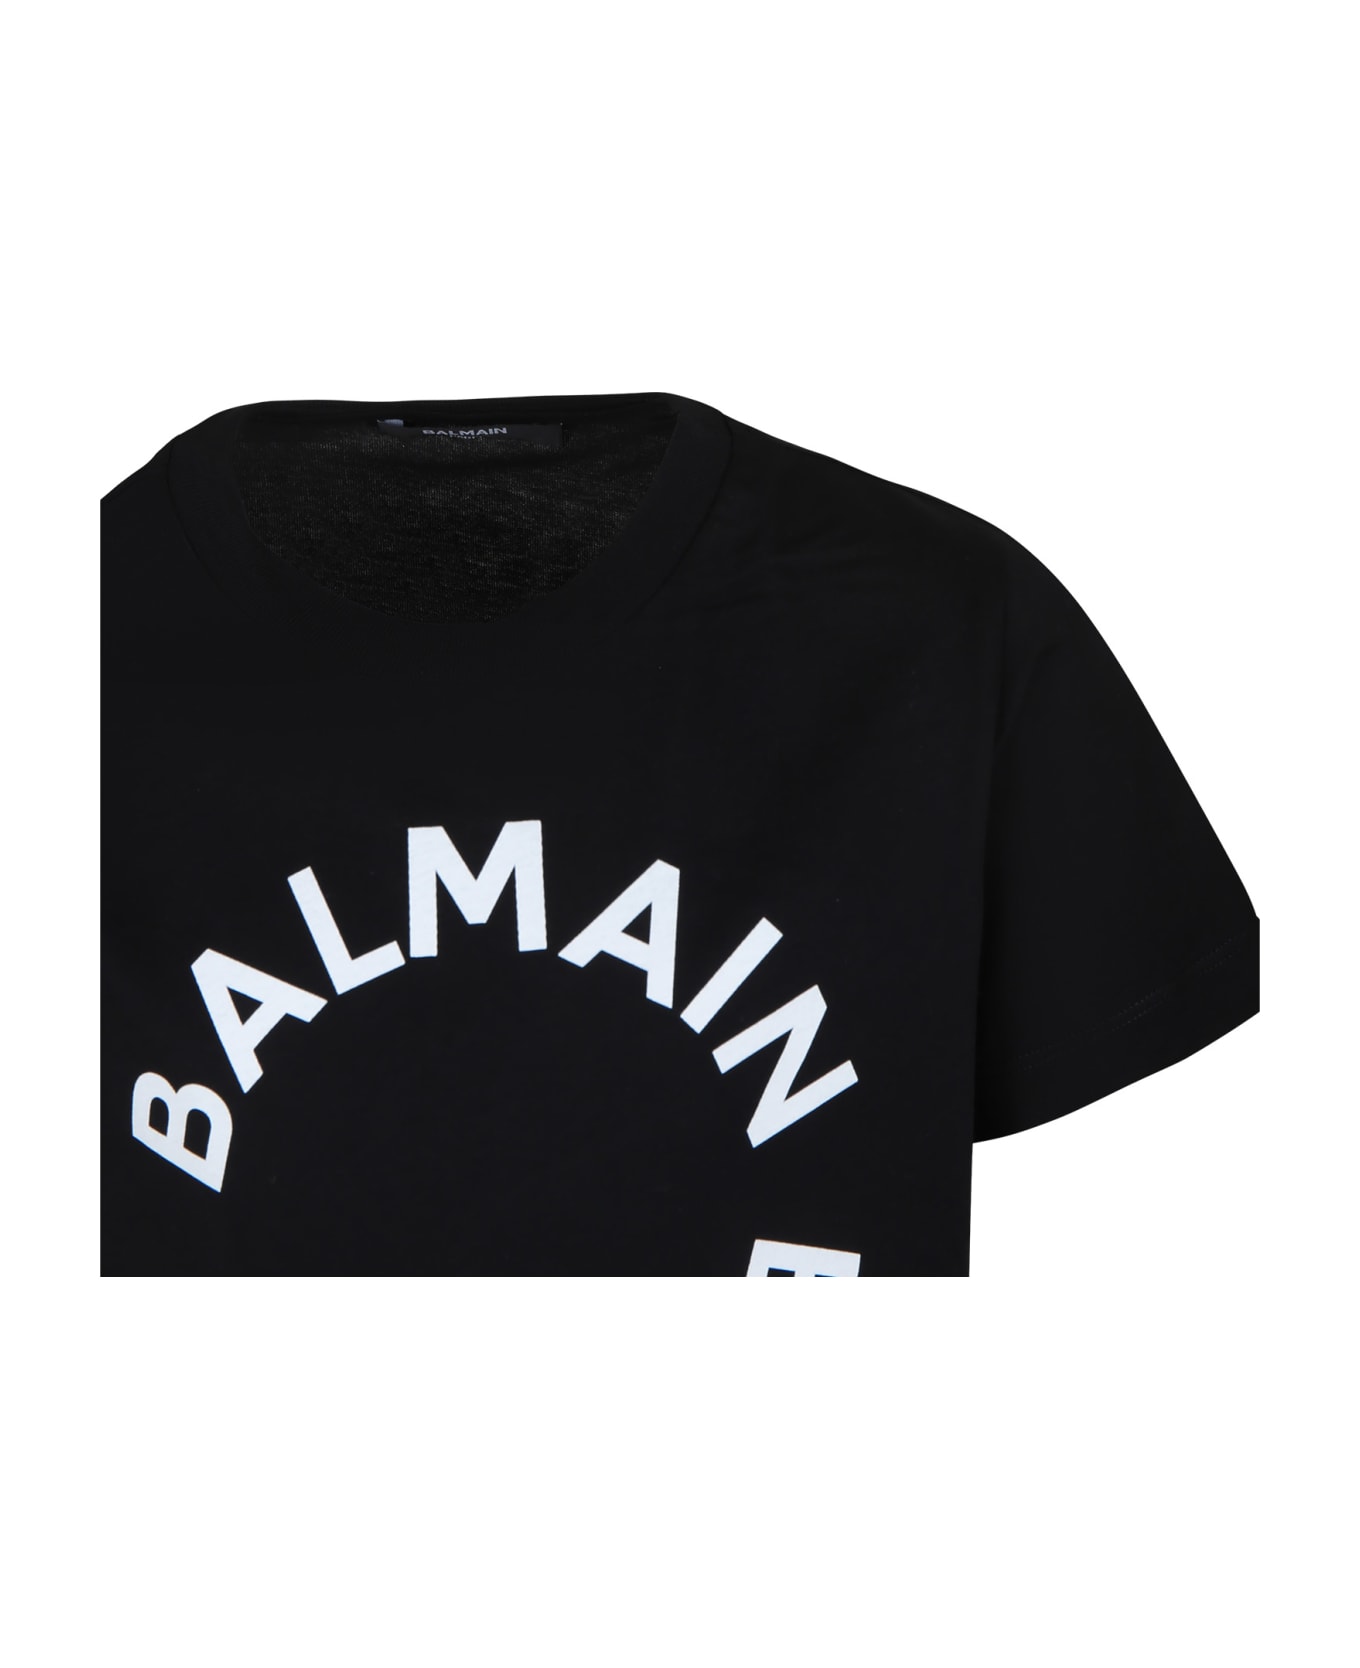 Balmain Black T-shirt For Kids With Logo - Black/white